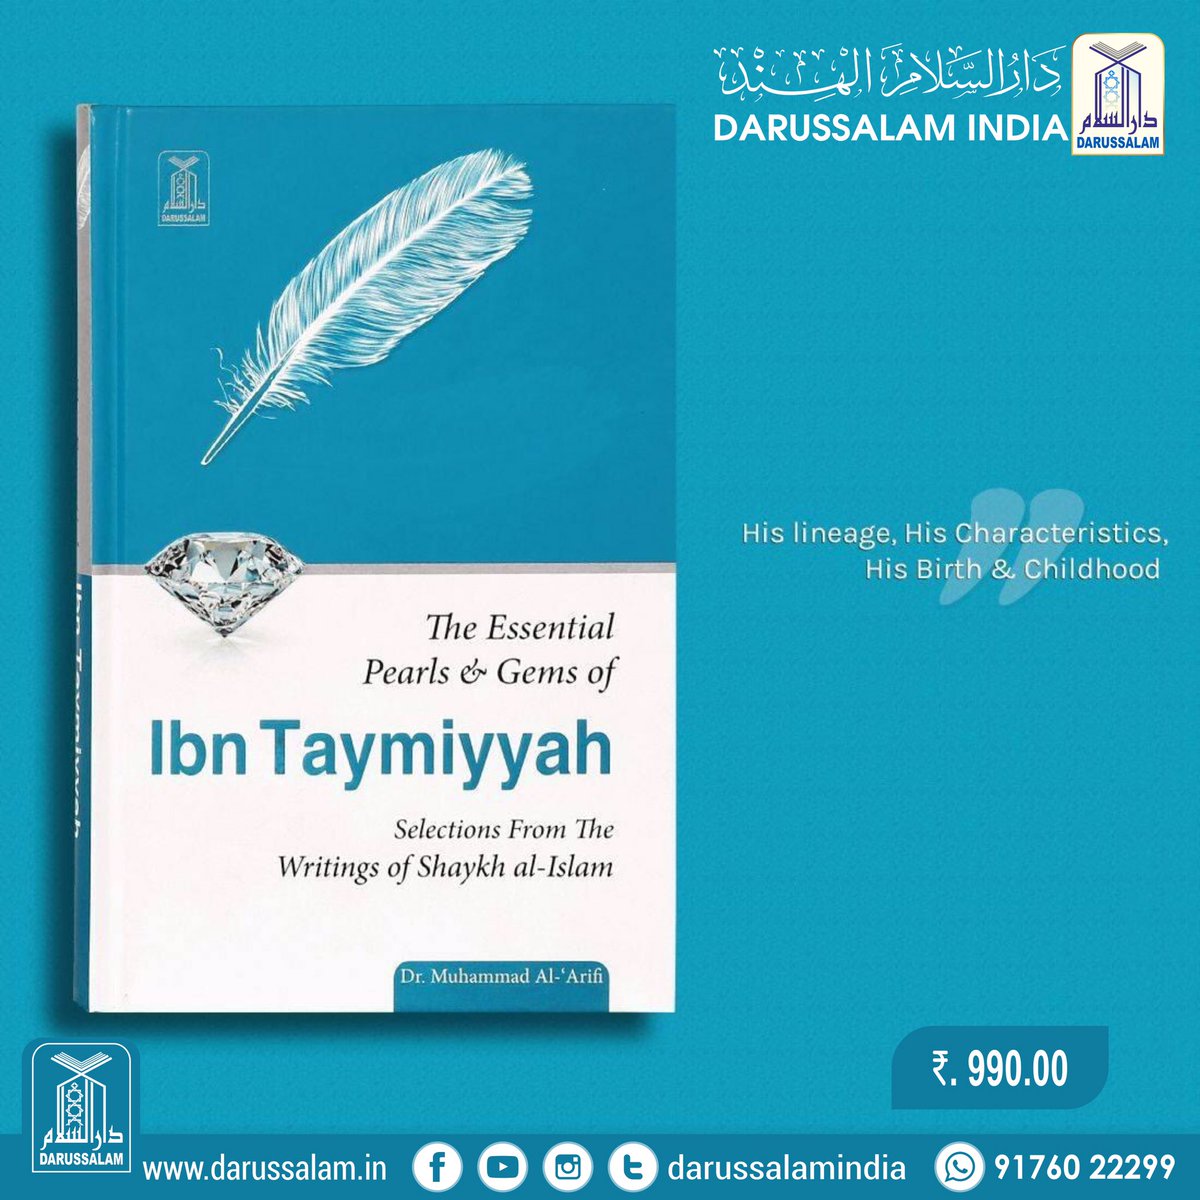 The Essential Pearls & Gems of Ibn Taymiyyah

Order Here: rb.gy/io7por
Price: Rs. 990/- 
Call / WhatsApp: +91 91760 22299

#IslamicScholar #IslamicHistory #pearlsofibntaymiyyah #Taymiyyah #Darussalam #Darussalamindia